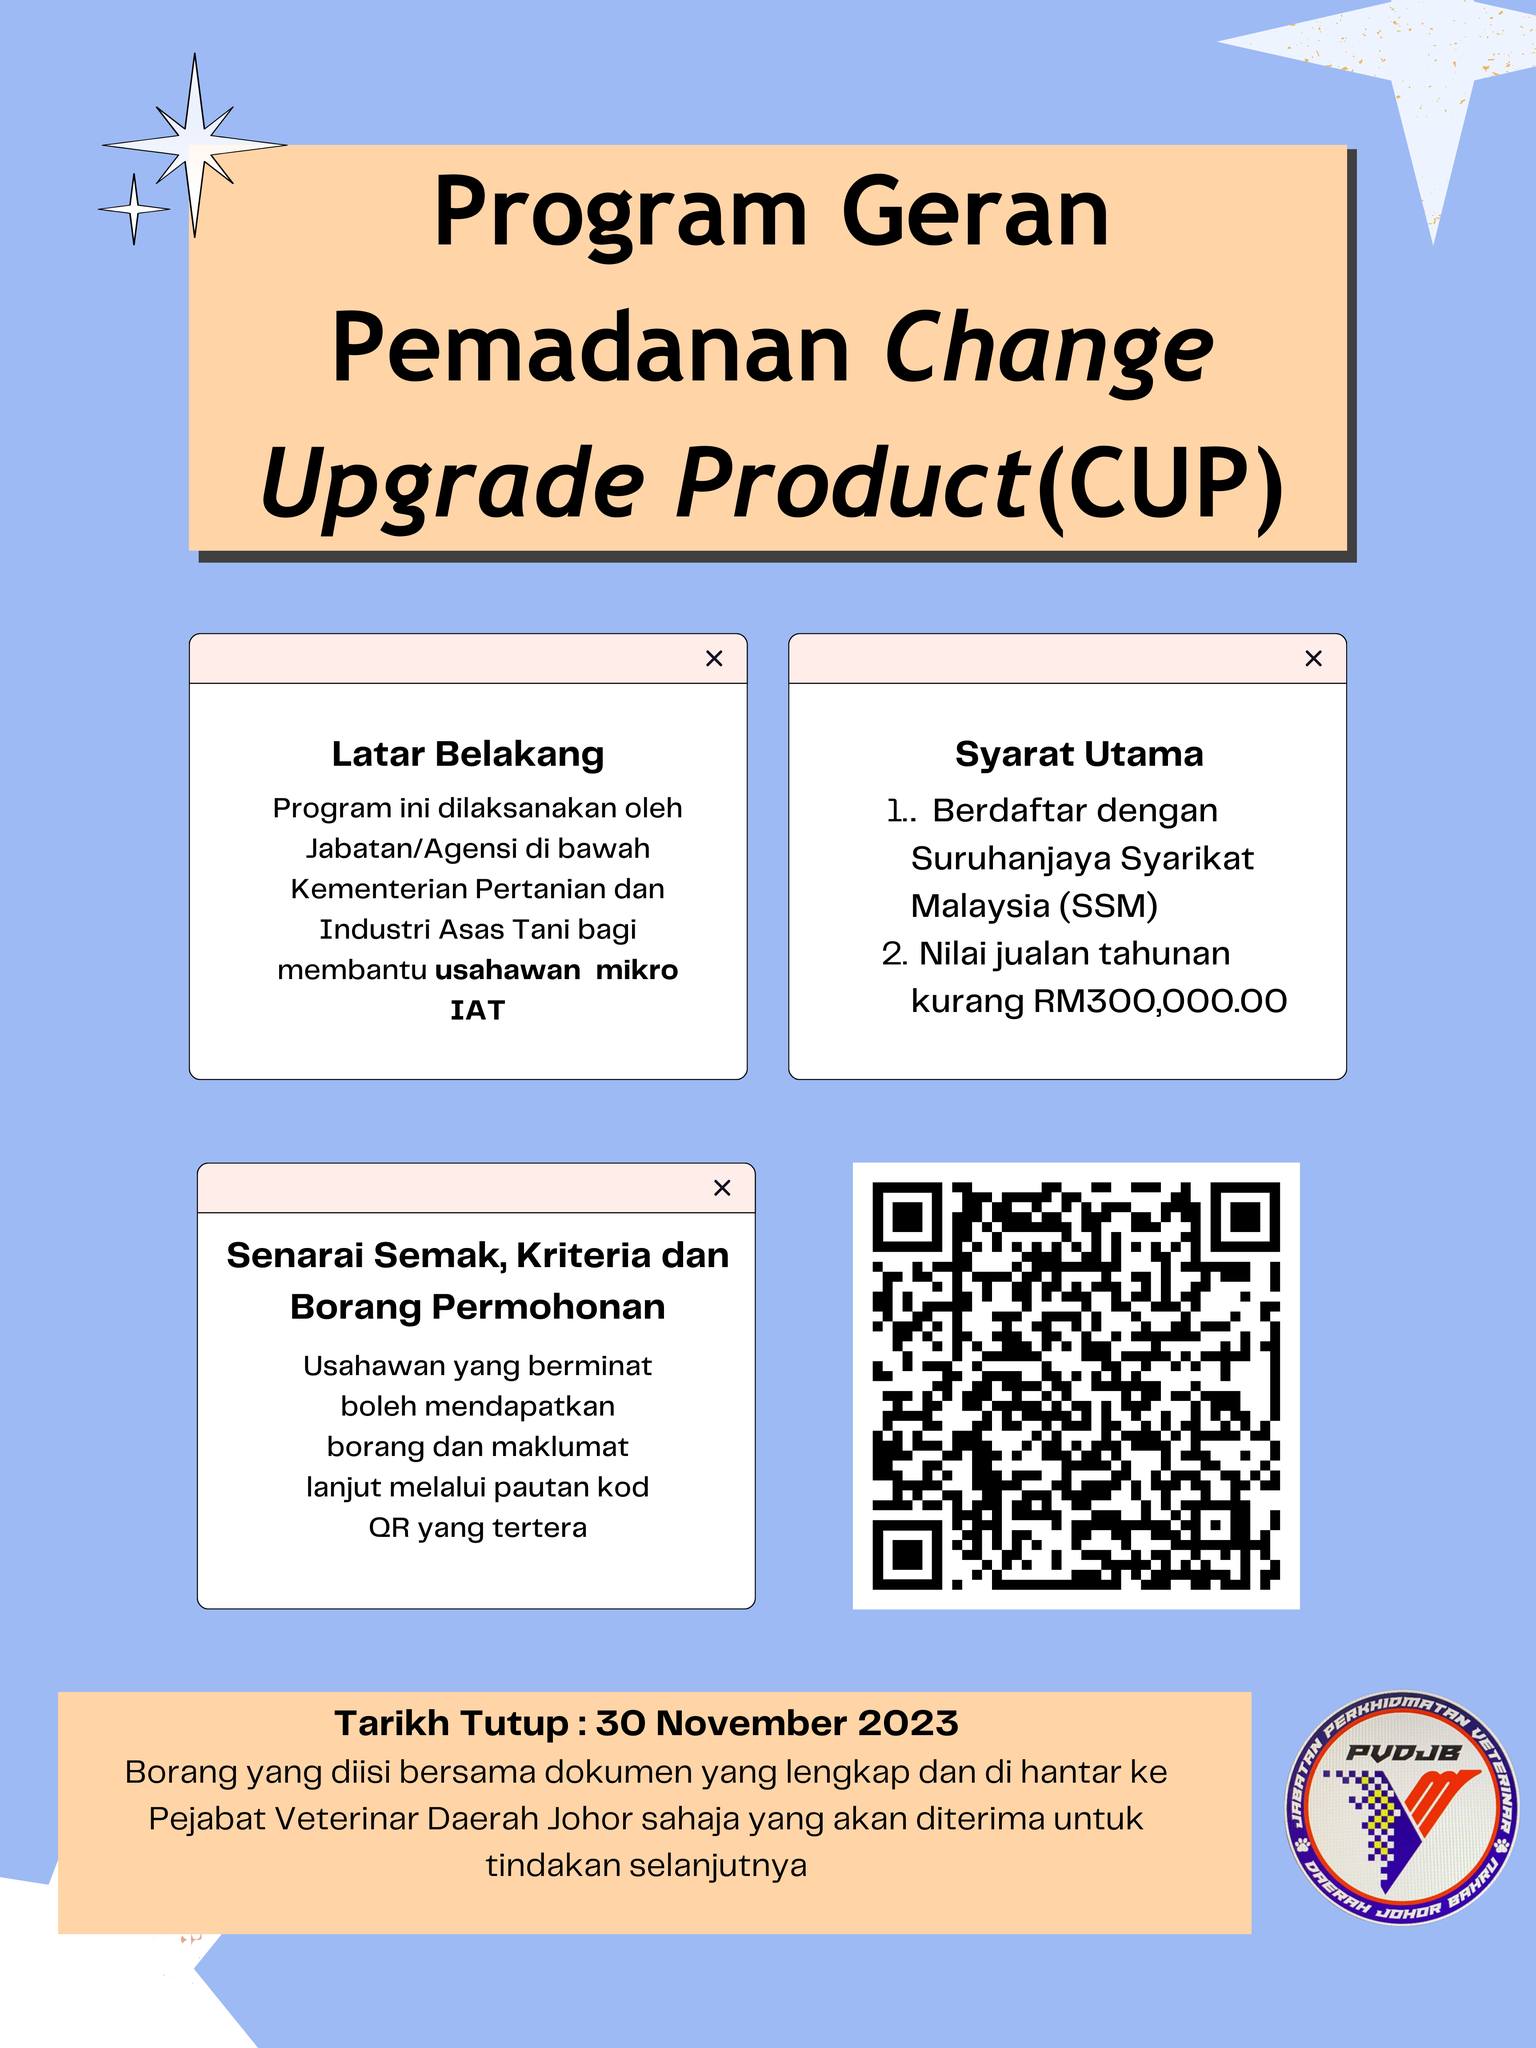 Program geran padanan change upgrade product